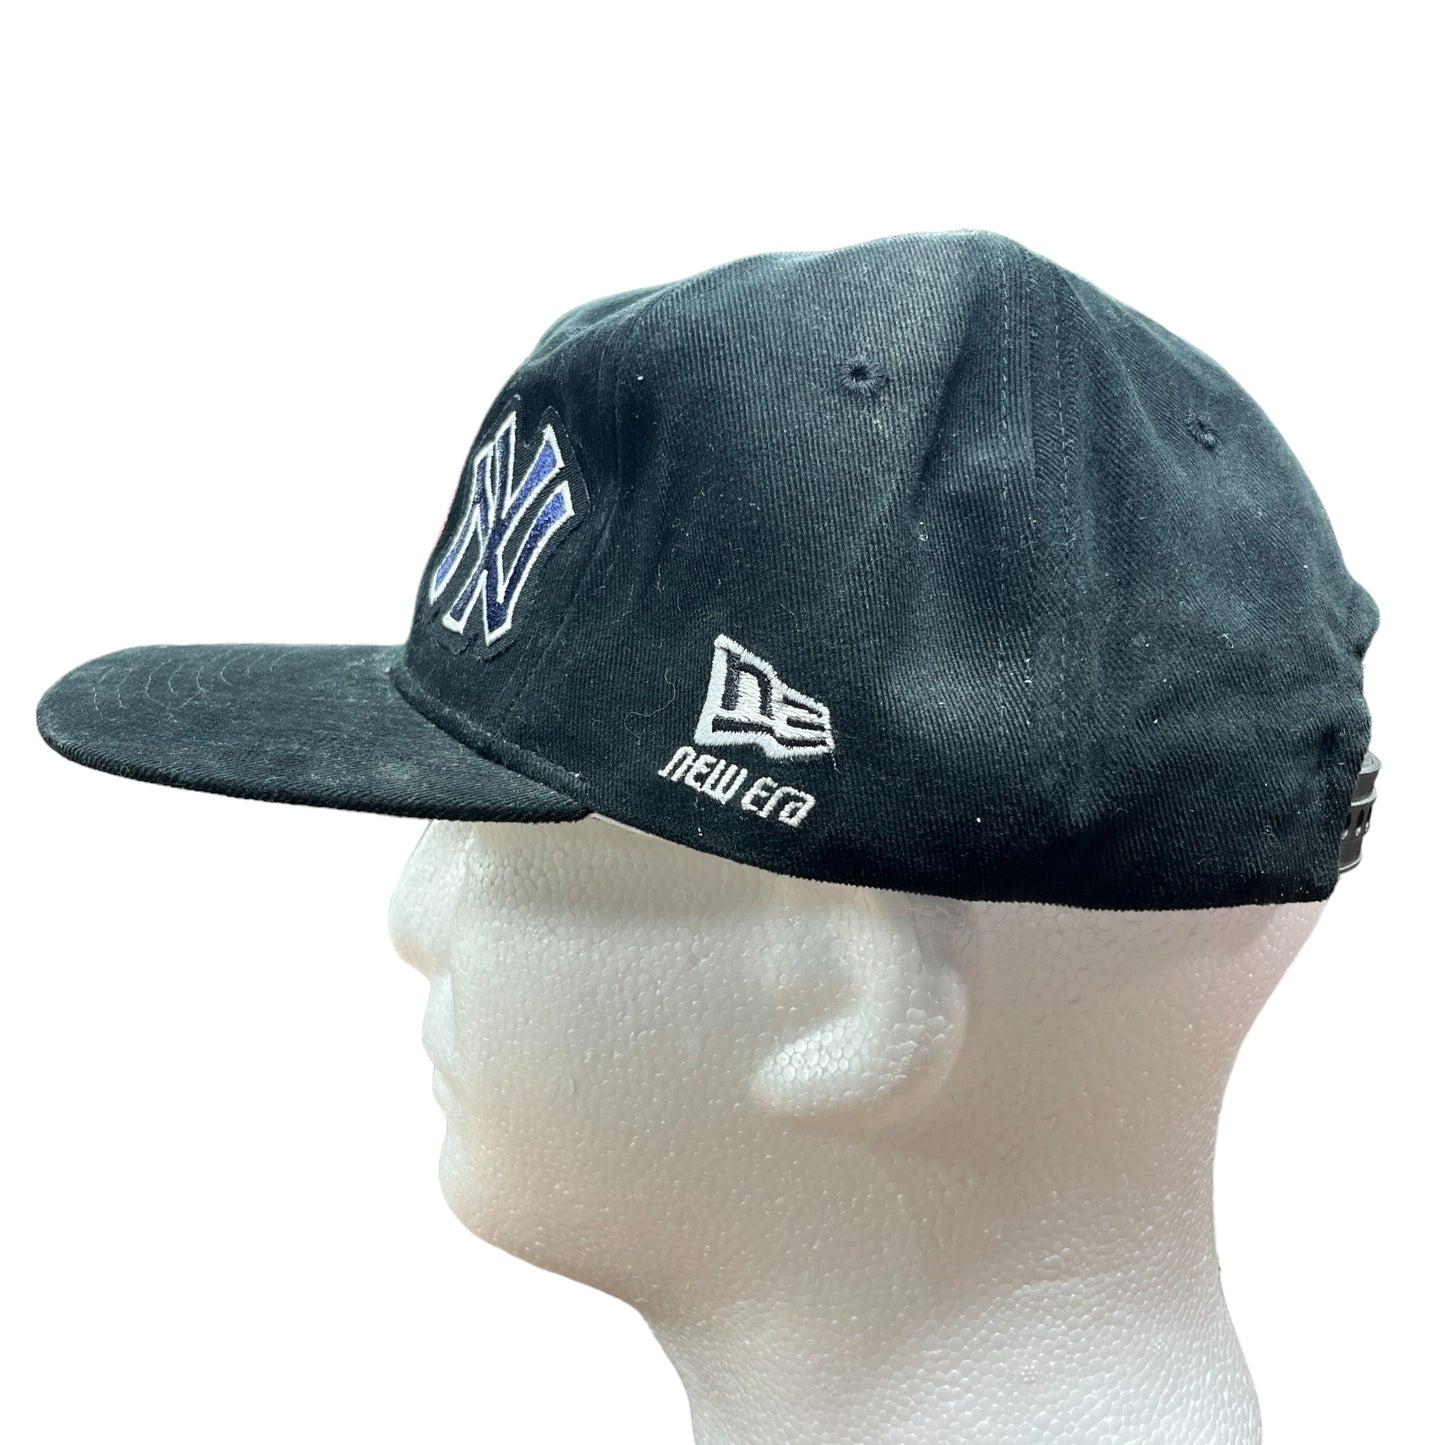 Vintage 1998 New Era New York Yankees World Series Snapback Hat